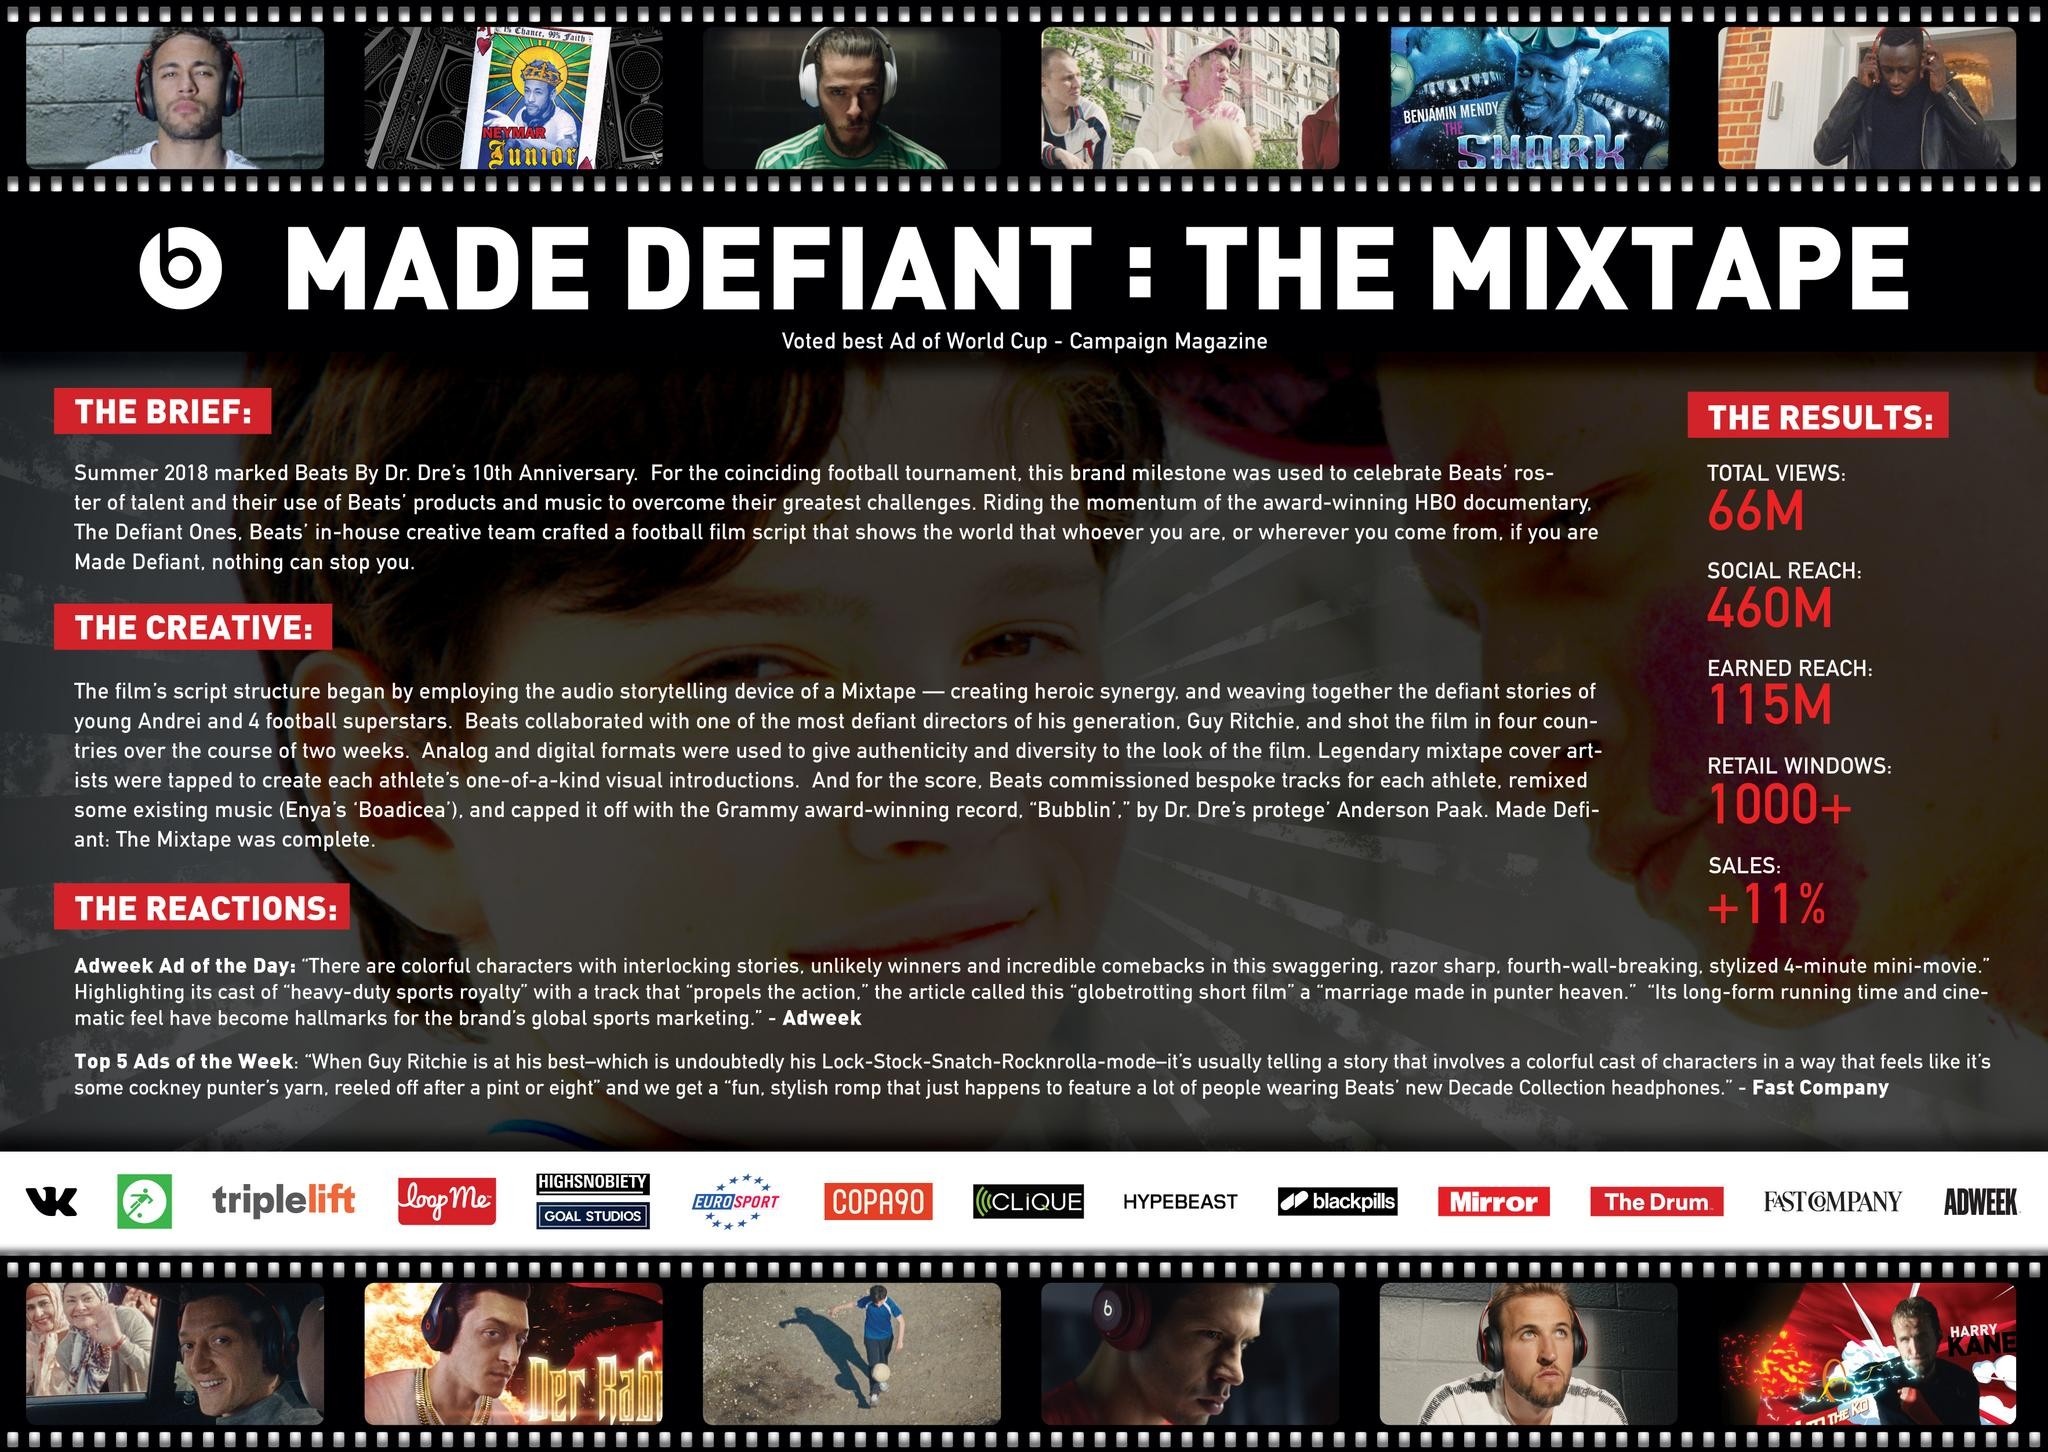 Made Defiant: The Mixtape